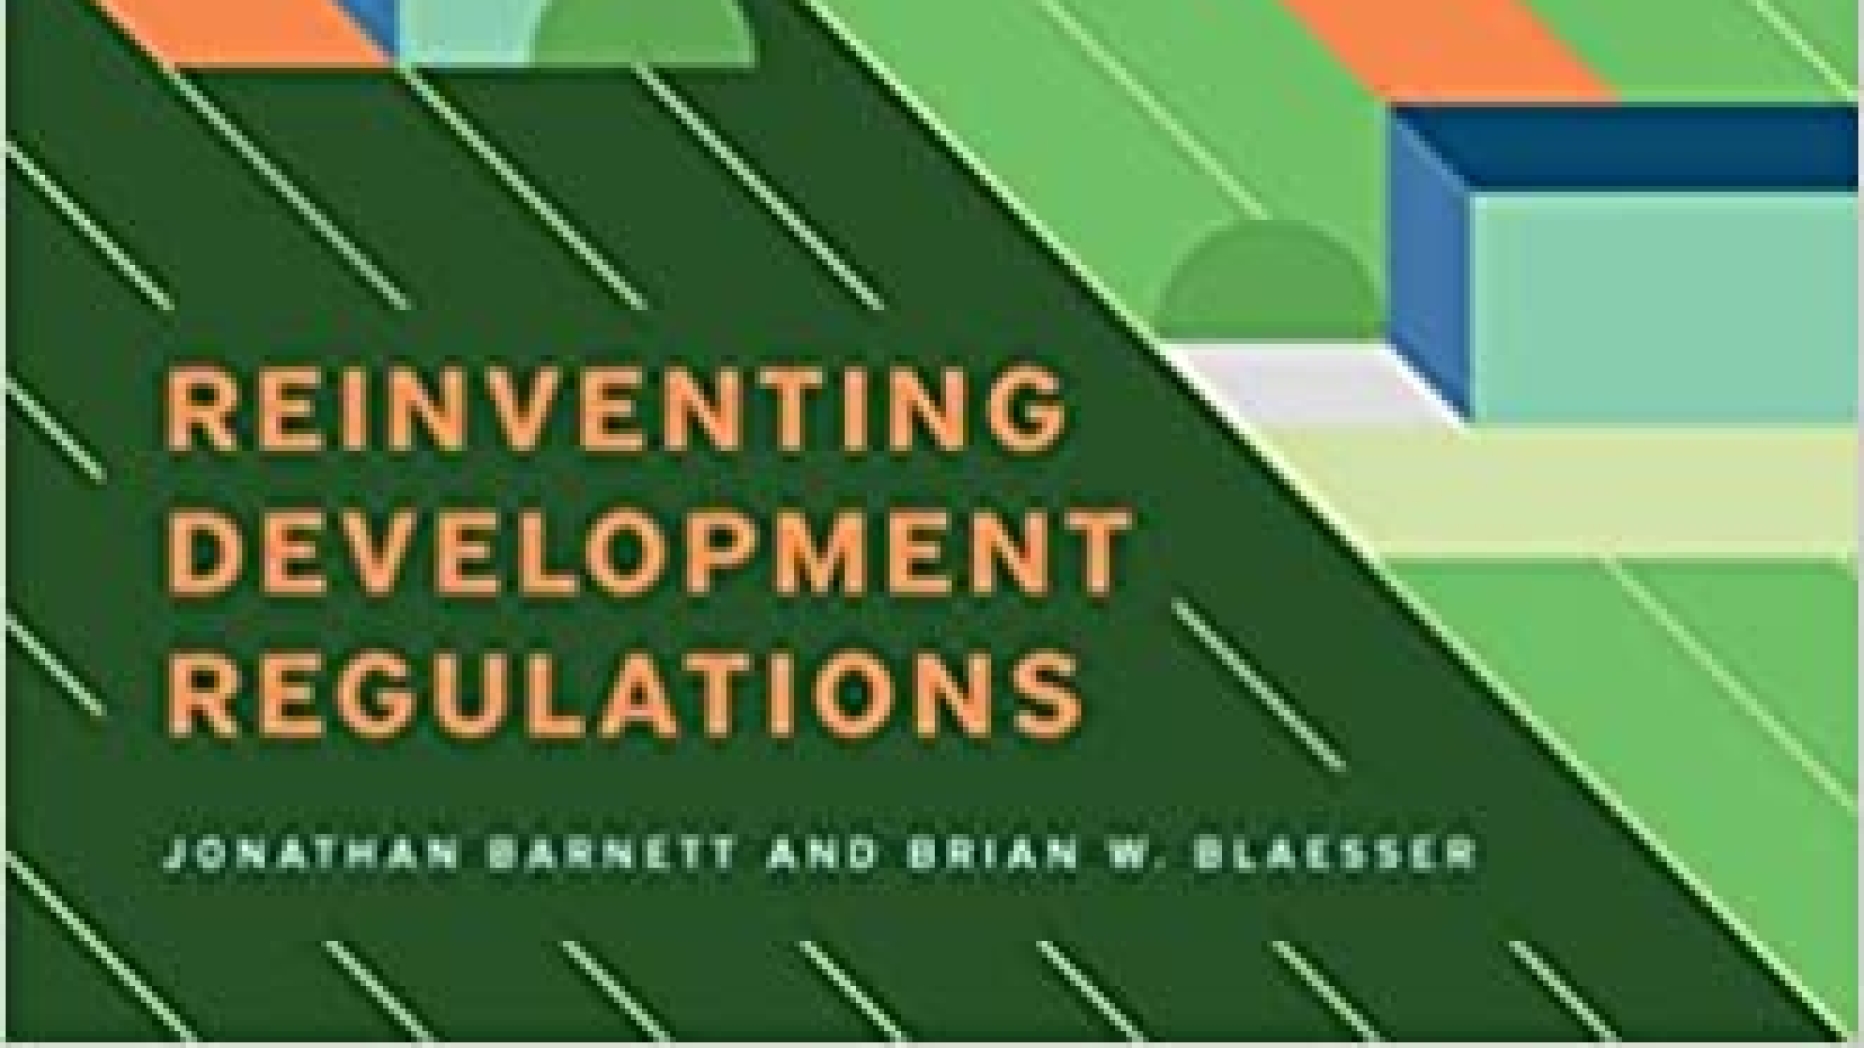 Reinventing Development cover